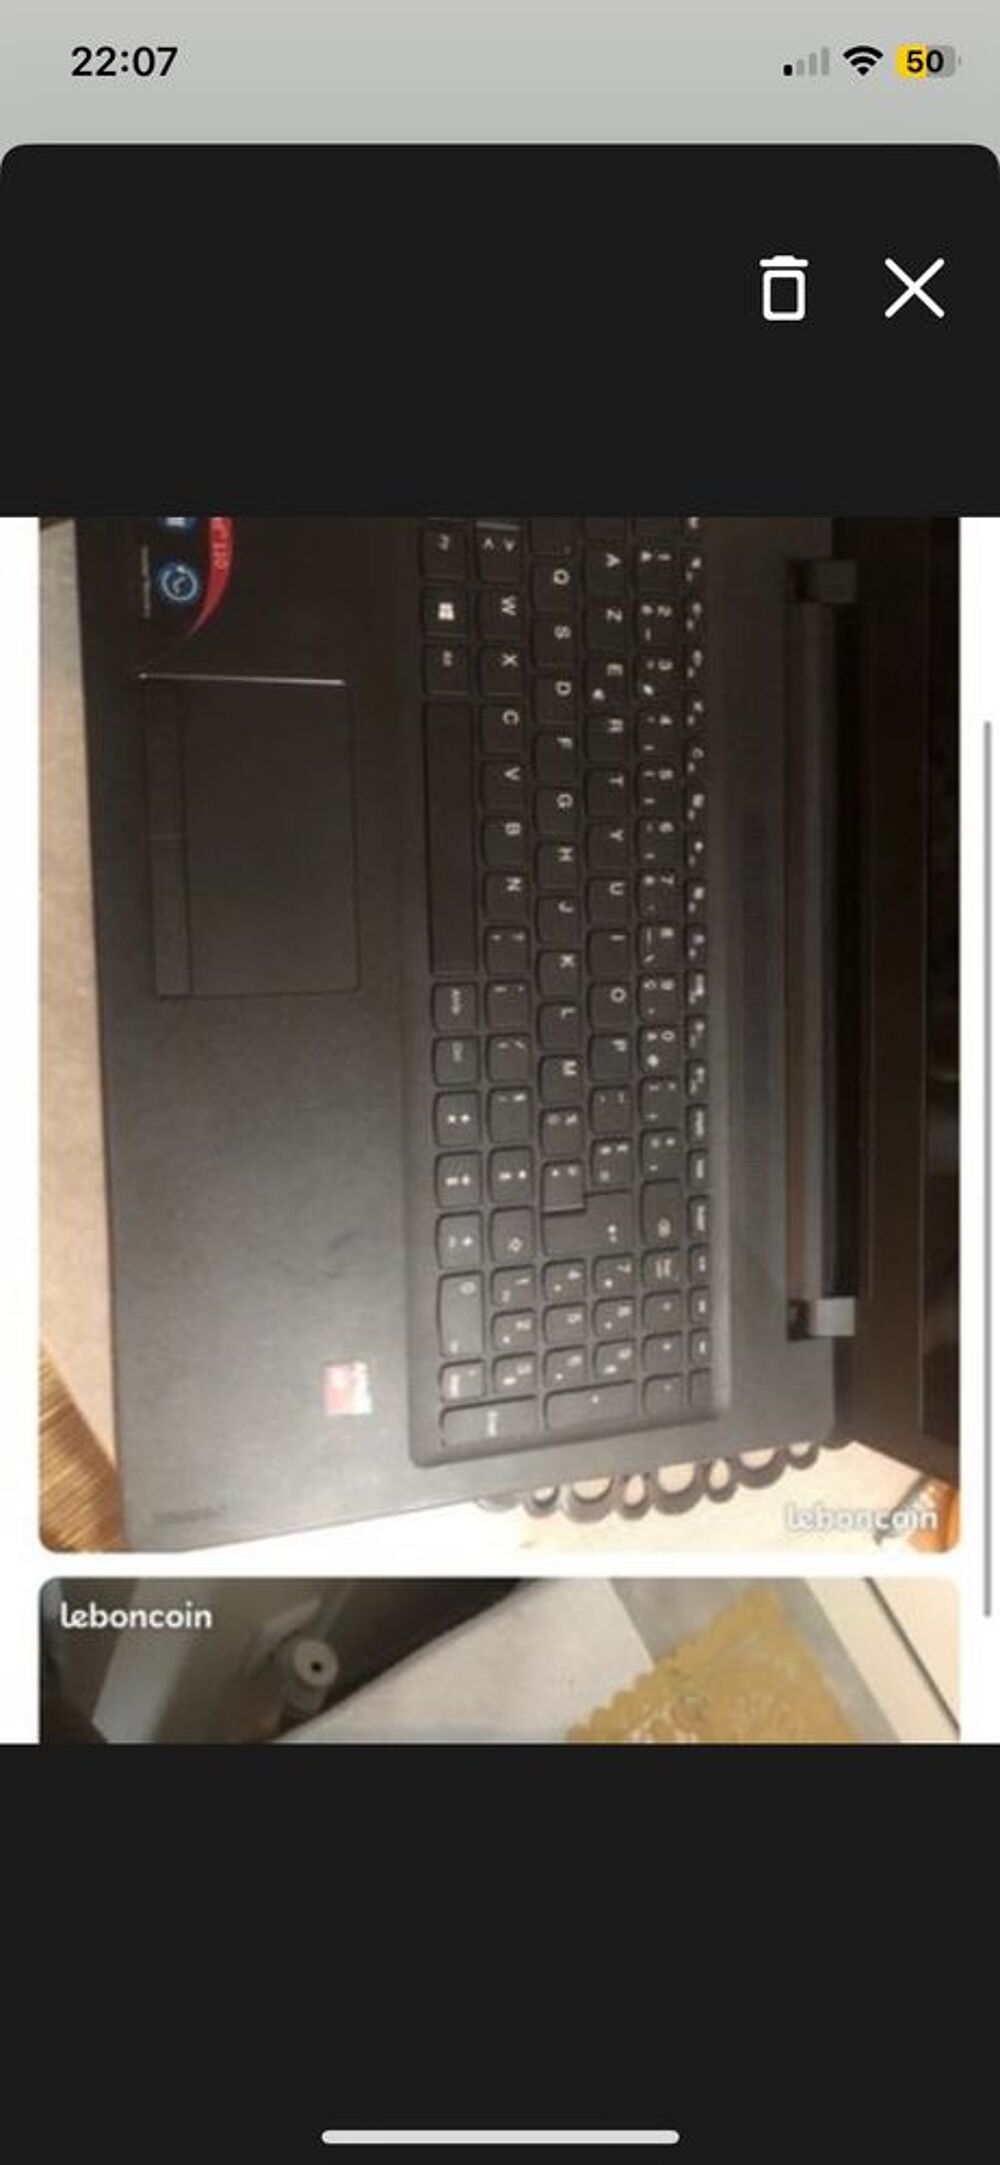 Ordinateur portable Lenovo Matriel informatique